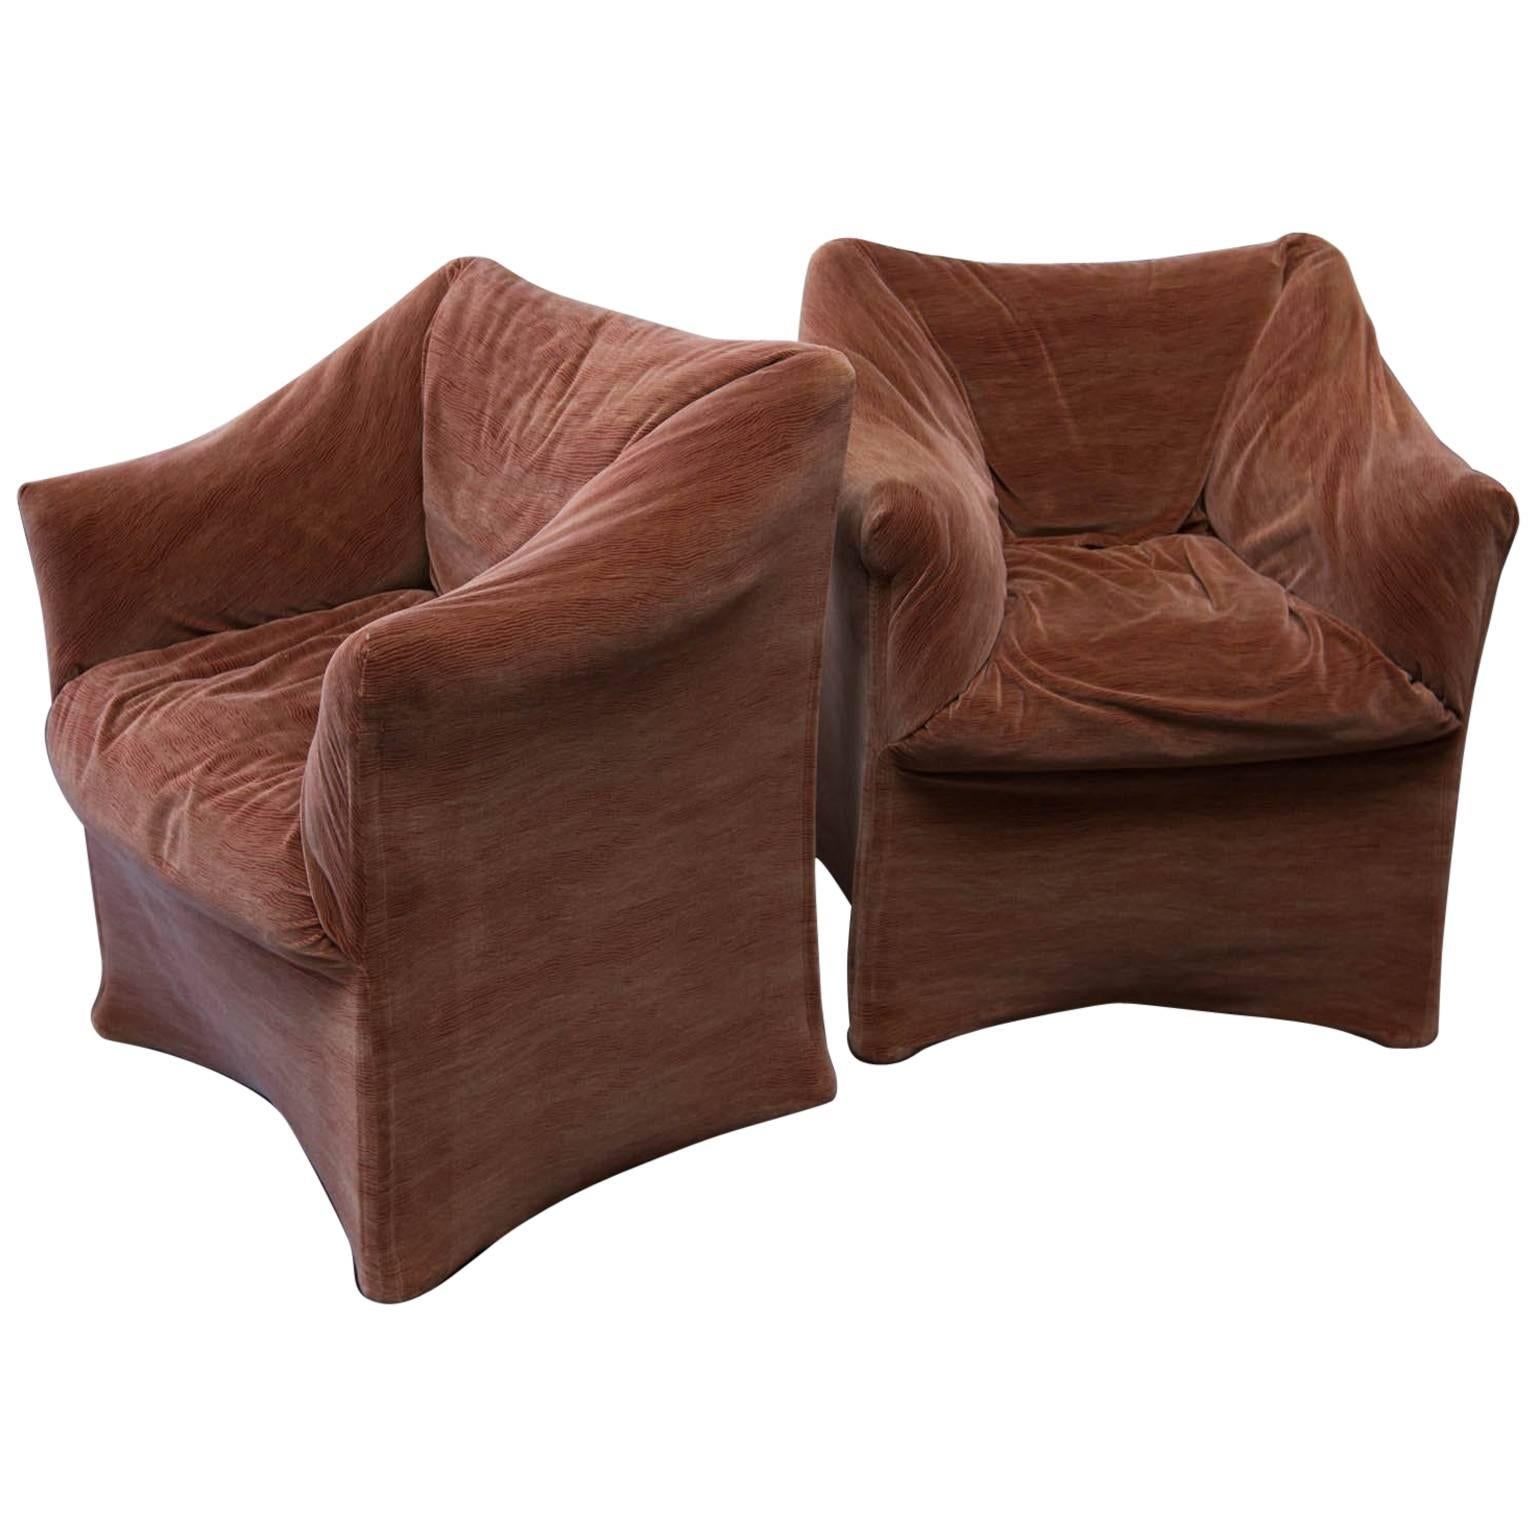 Pair of Mario Bellini Tentazione Lounge Chairs for Cassina